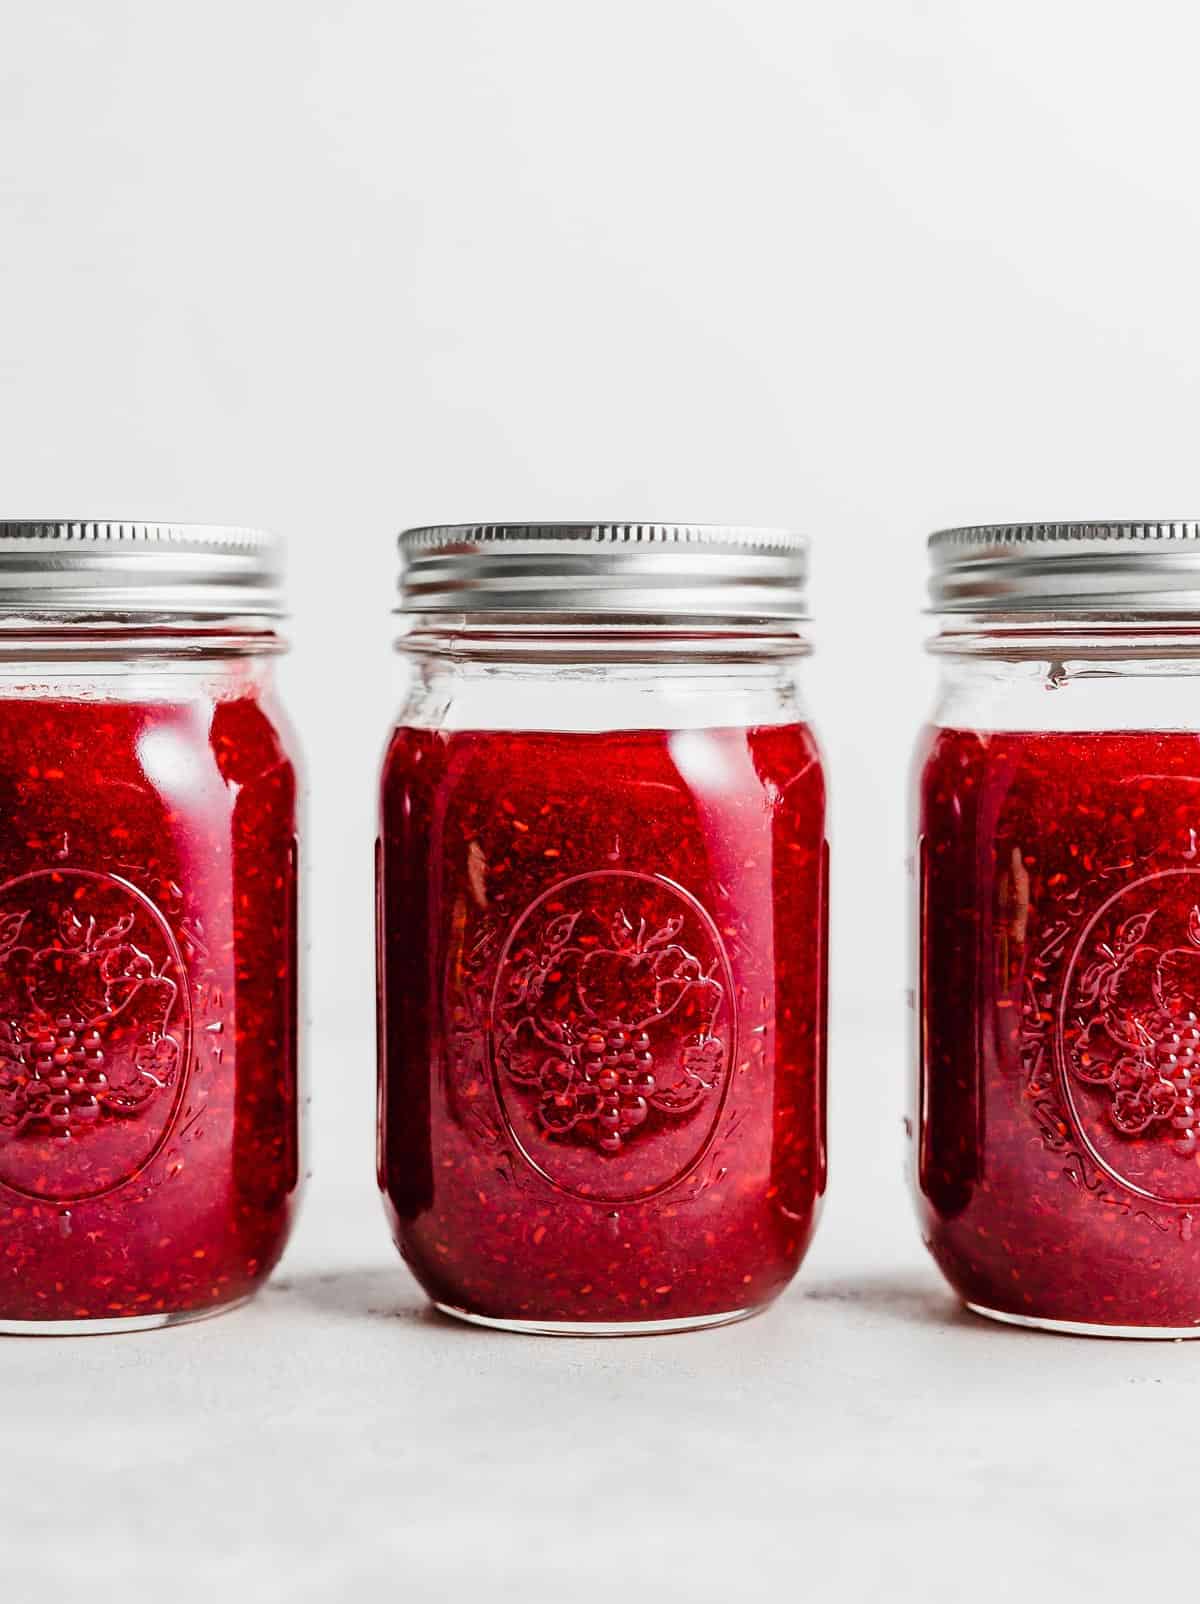 Three jars of Raspberry Freezer Jam on a white background.